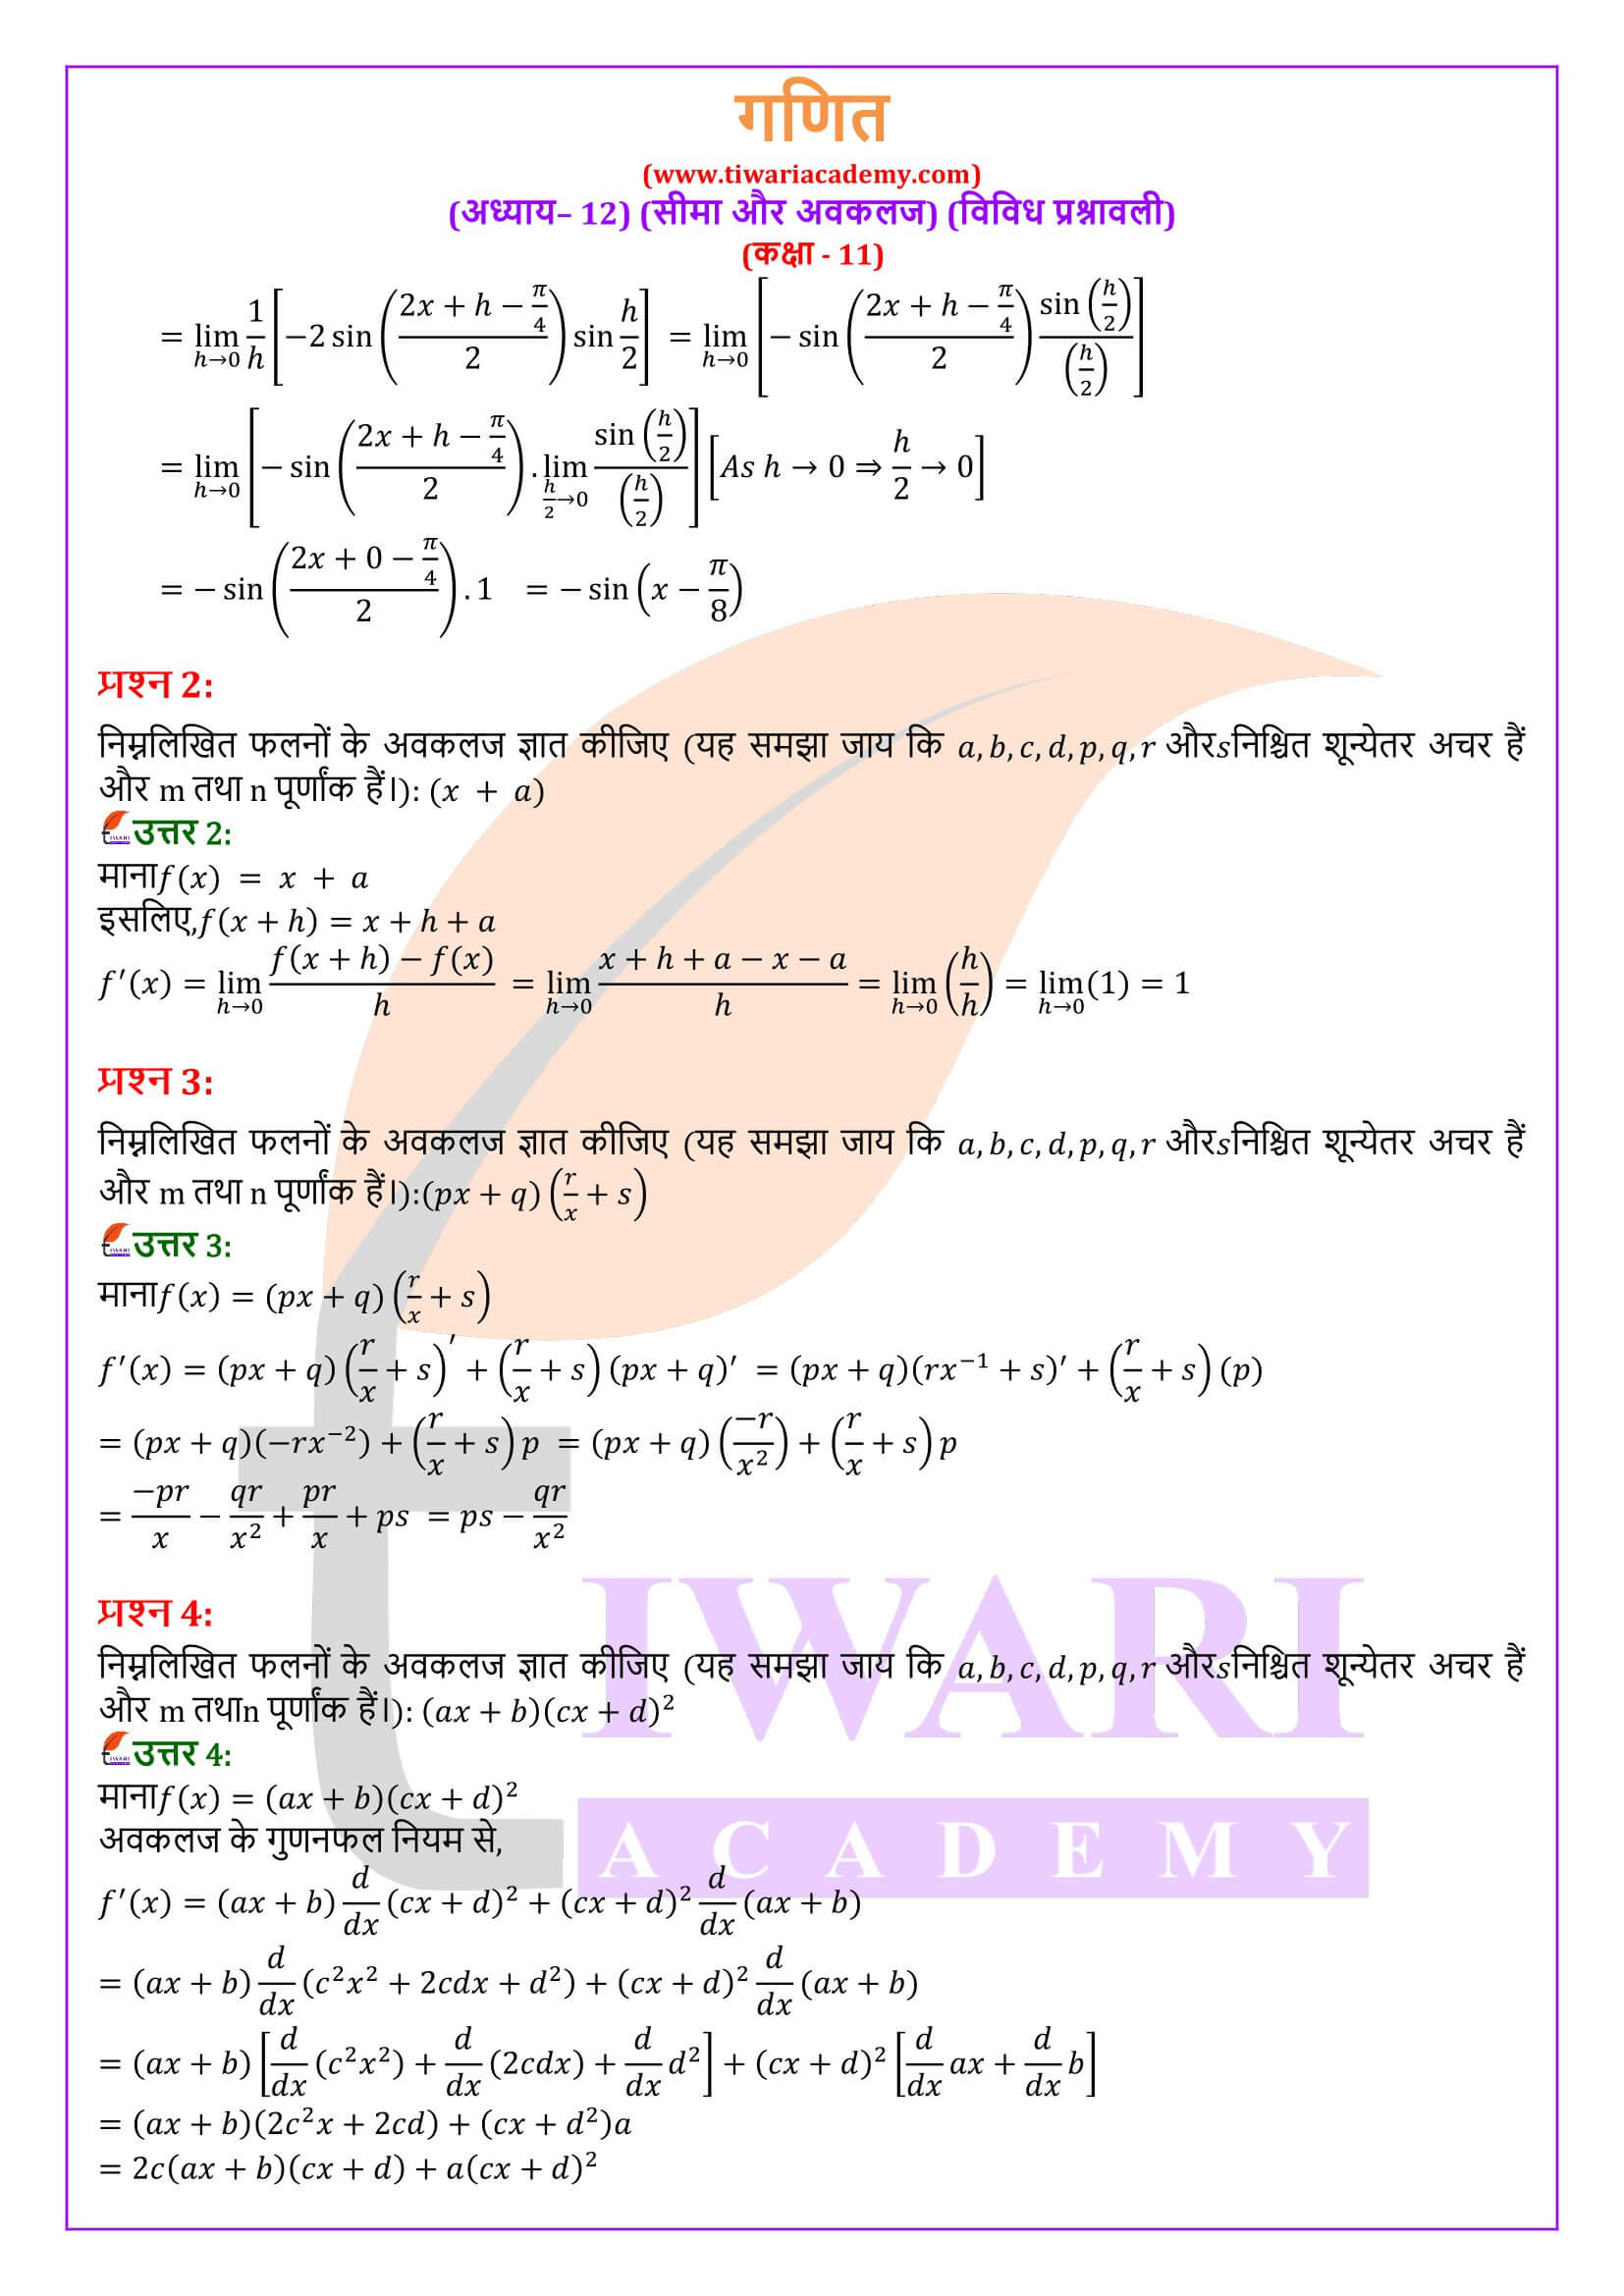 एनसीईआरटी समाधान कक्षा 11 गणित अध्याय 12 विविध प्रश्नावली के प्रश्न उत्तर